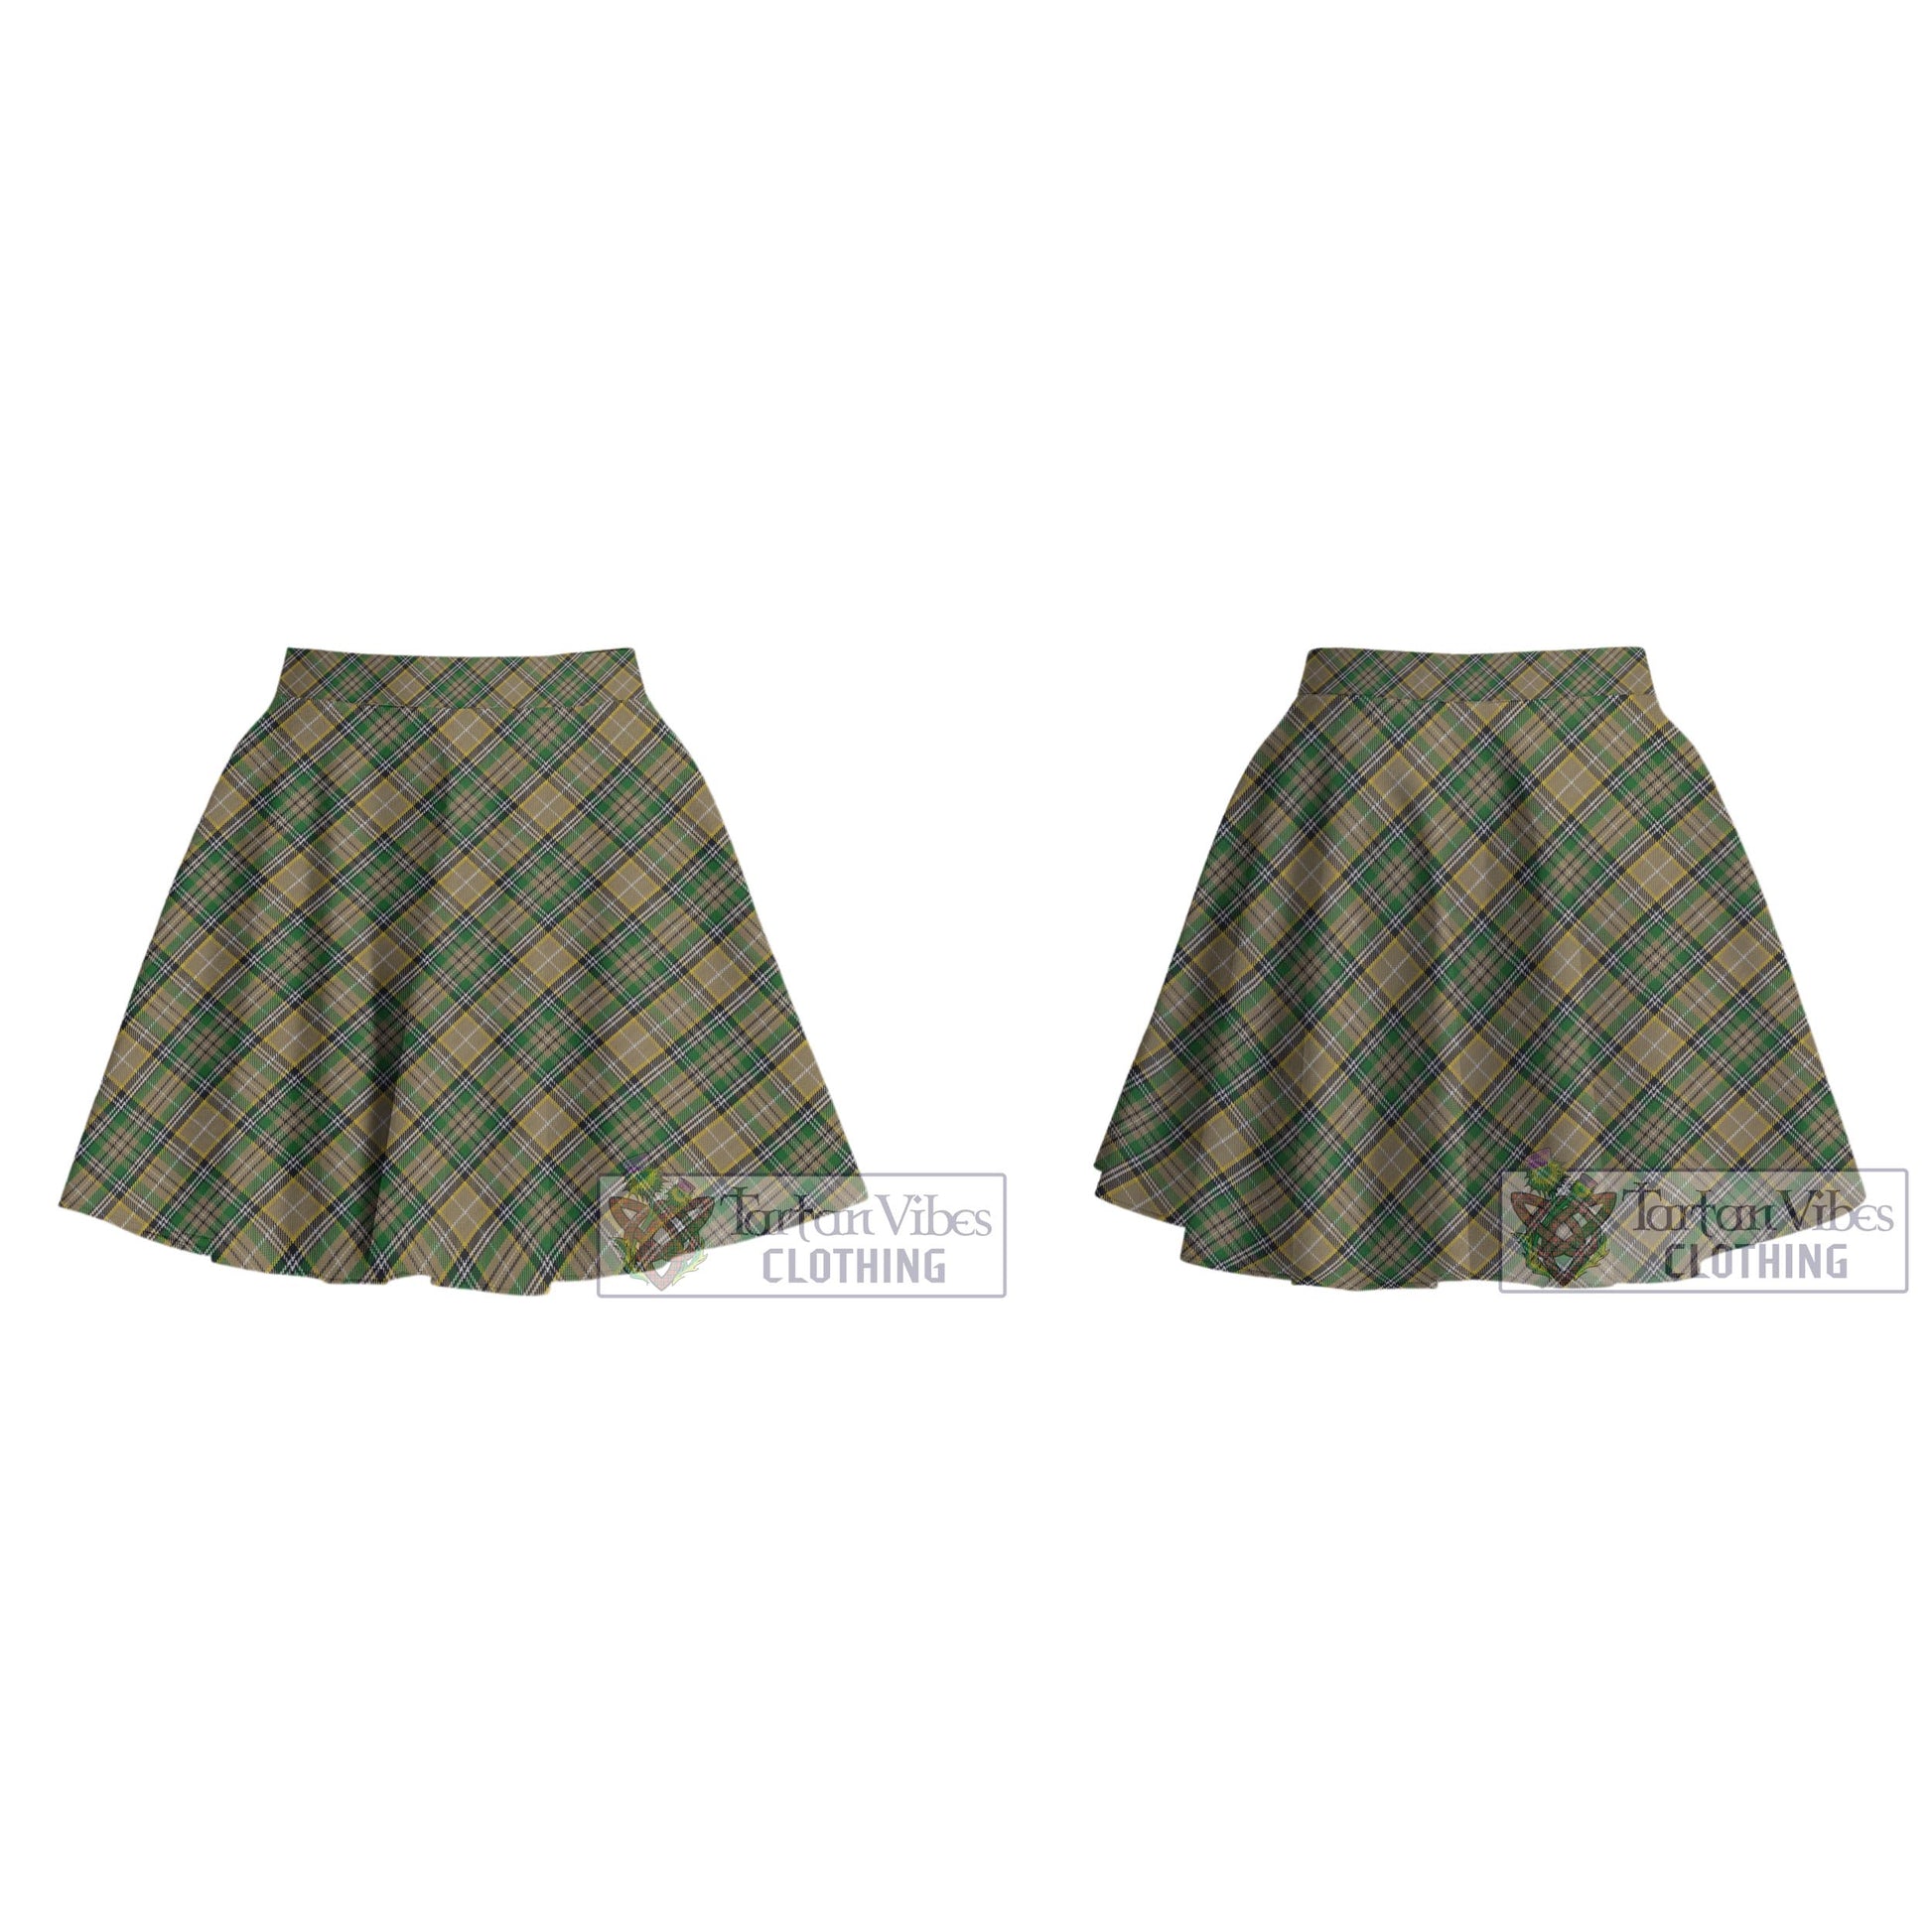 Tartan Vibes Clothing O'Farrell Tartan Women's Plated Mini Skirt